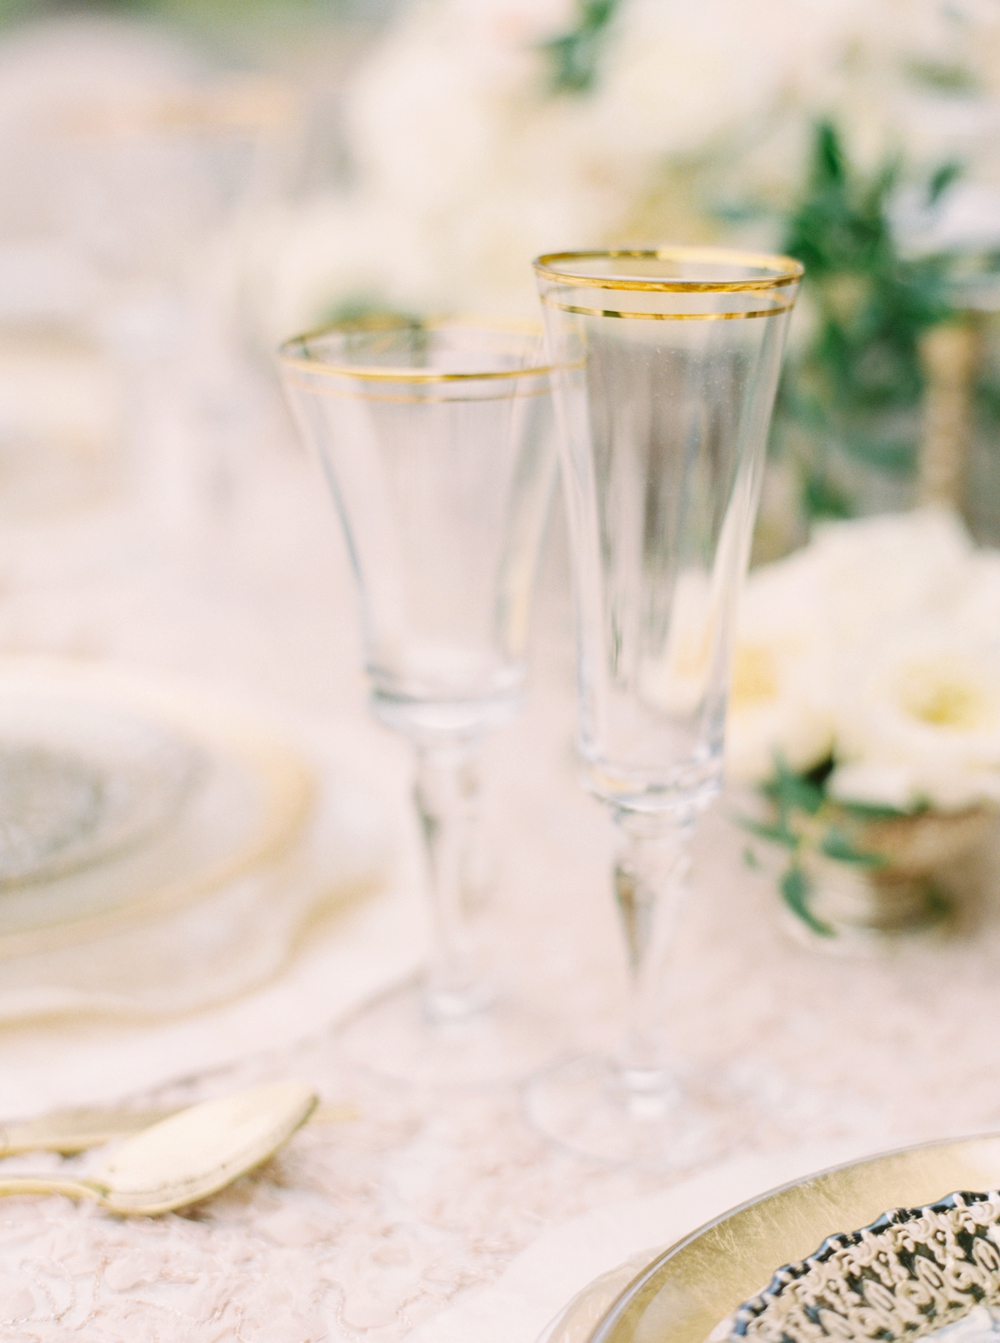 Calgary Wedding Photographers | Julianne Young Weddings | The Well Styled Life | Table Decor